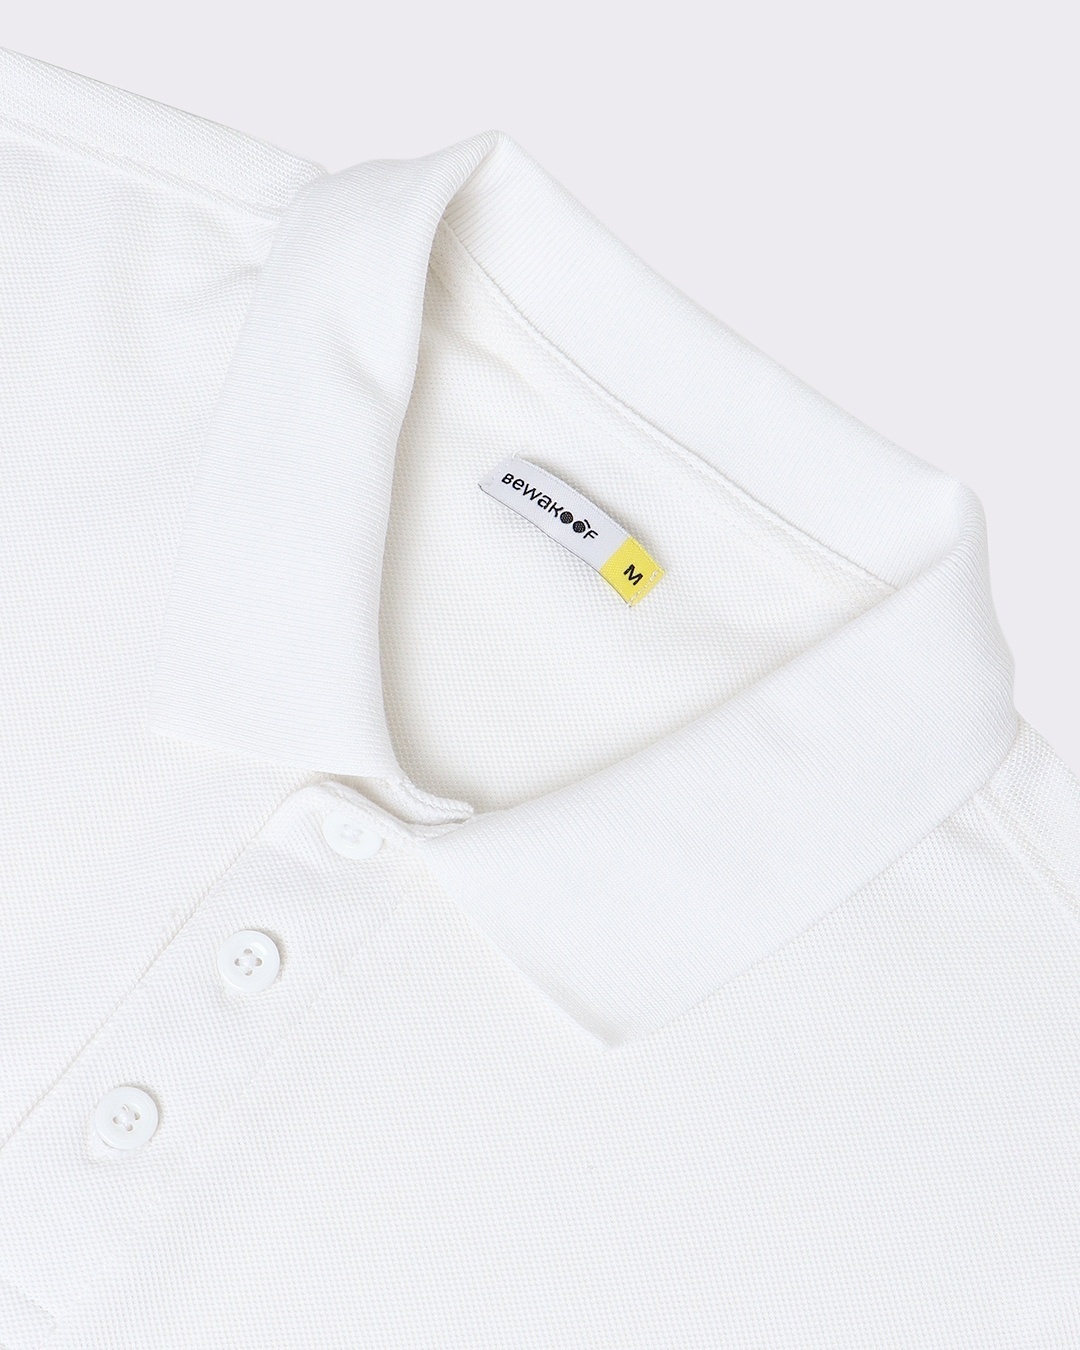 Shop Men's White Solid Polo T-shirt